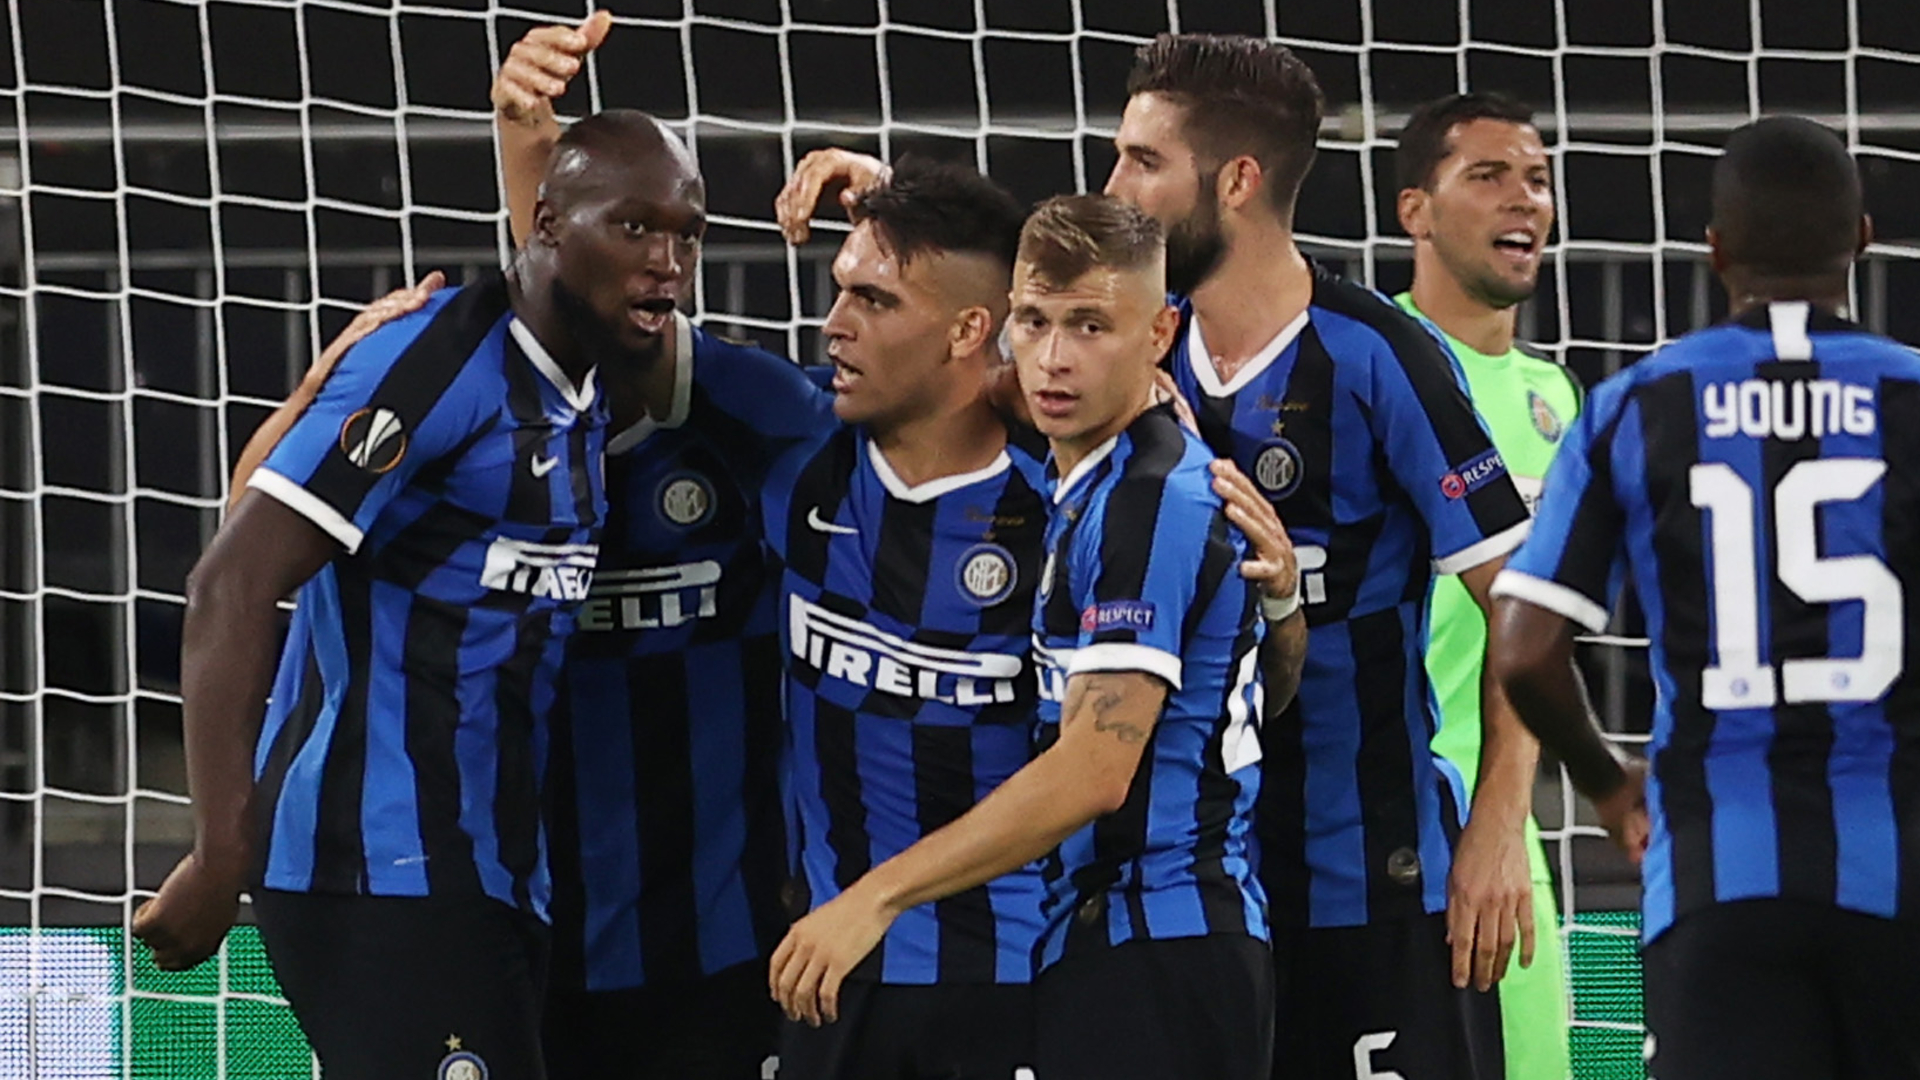 Inter star Romelu Lukaku is looking ahead after advancing in the Europa League.